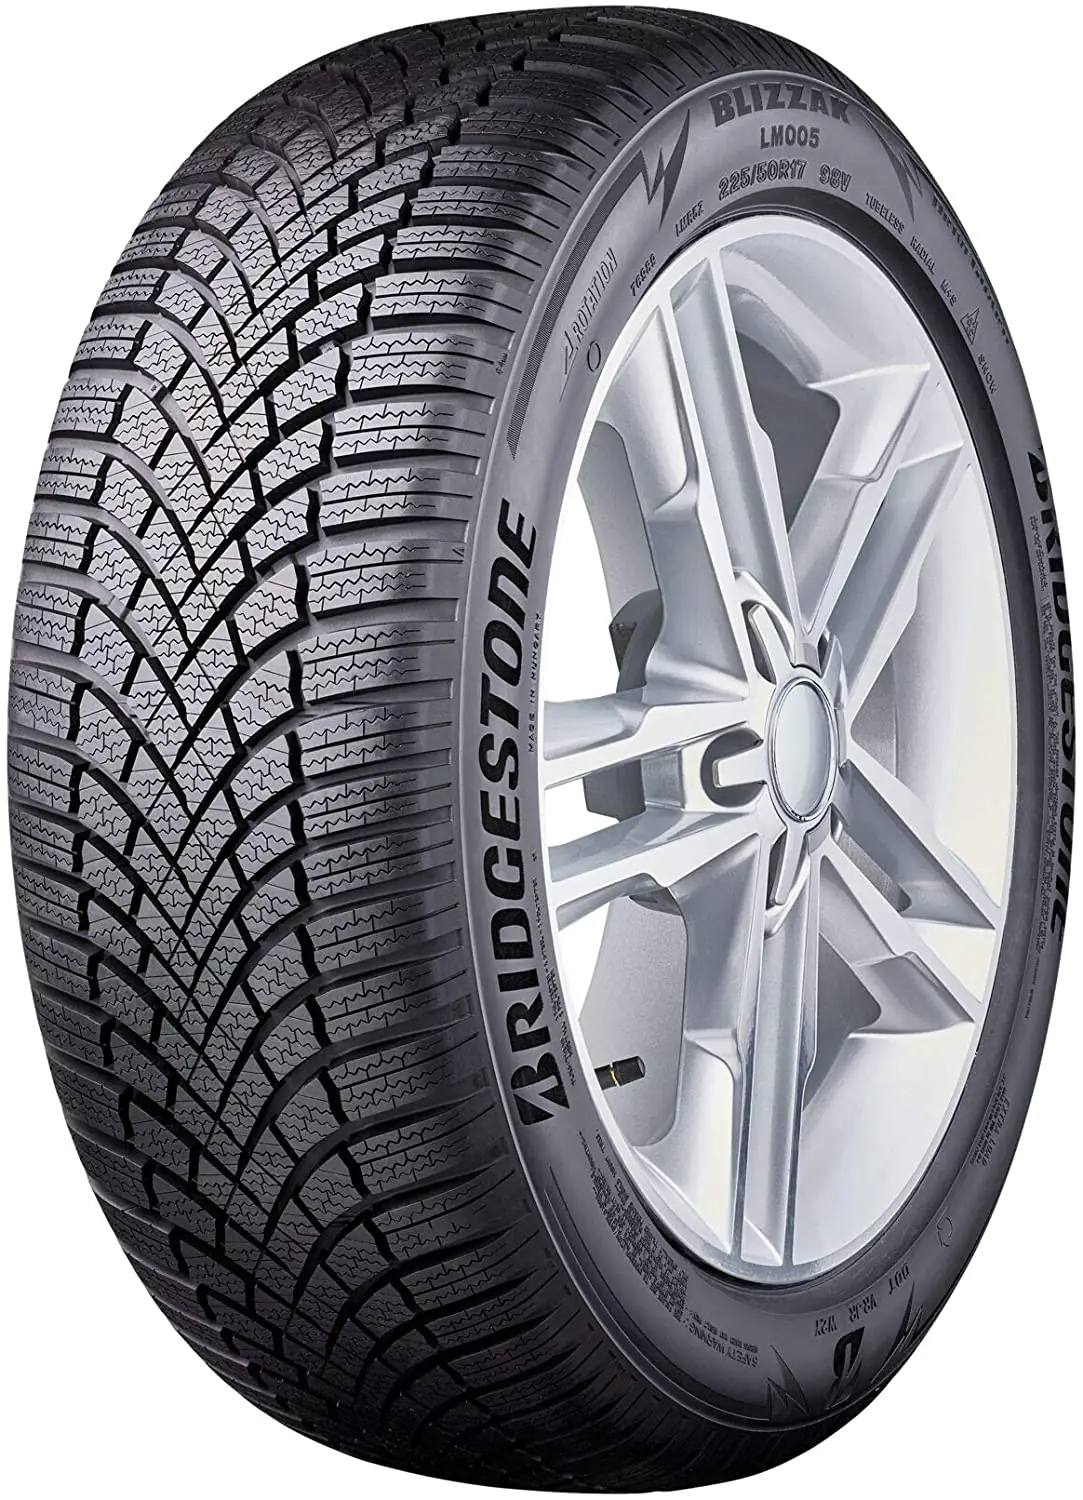 Bridgestone Bridgestone 215/55 R17 98V LM005 XL pneumatici nuovi Invernale 